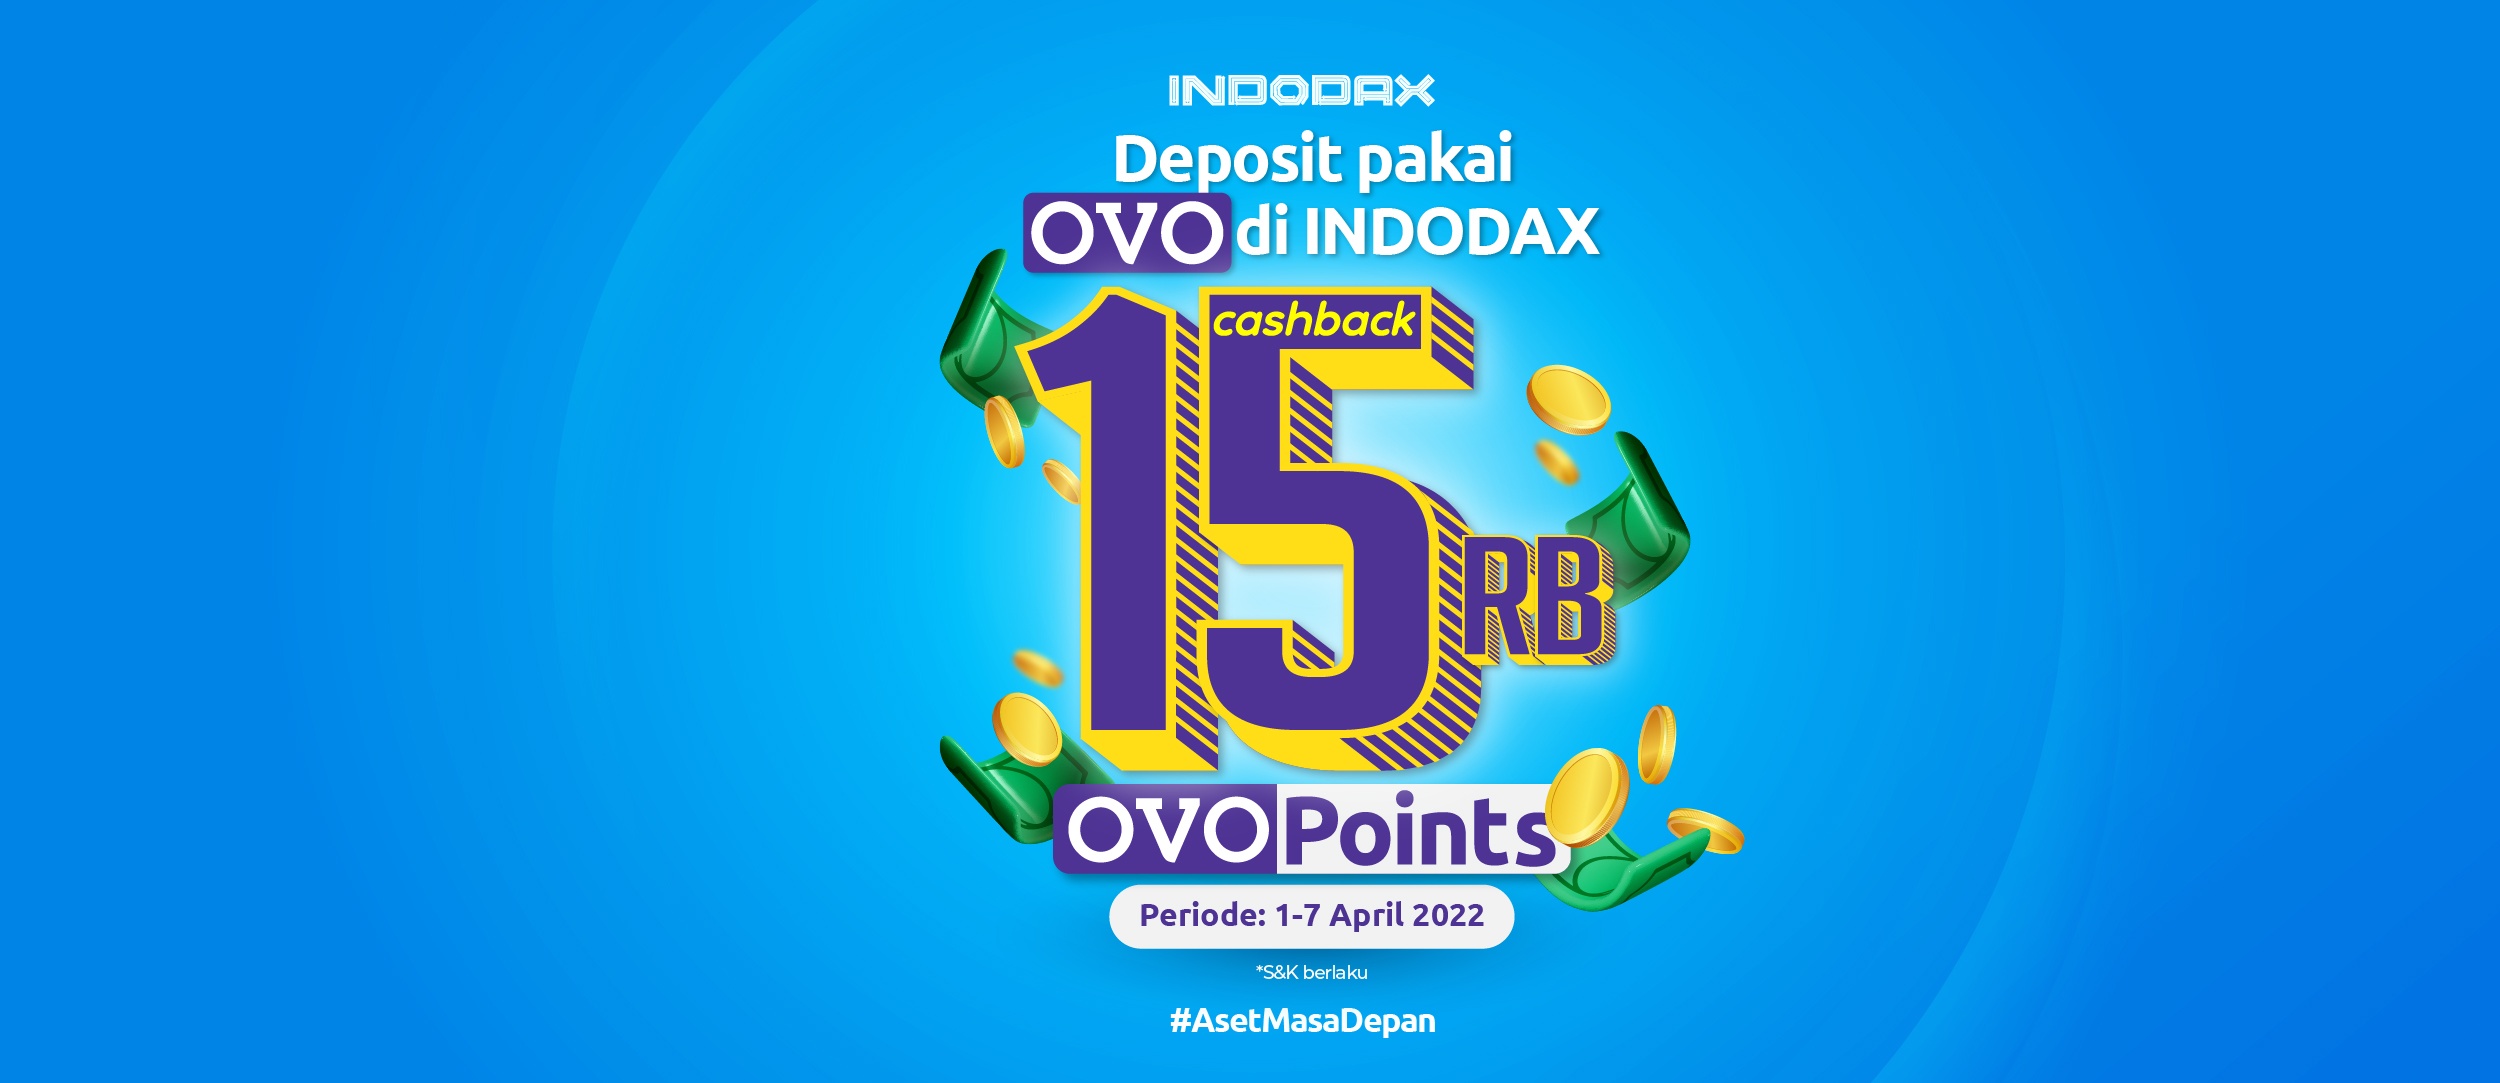 Deposit Pakai OVO di Indodax dapat Cashback 15rb